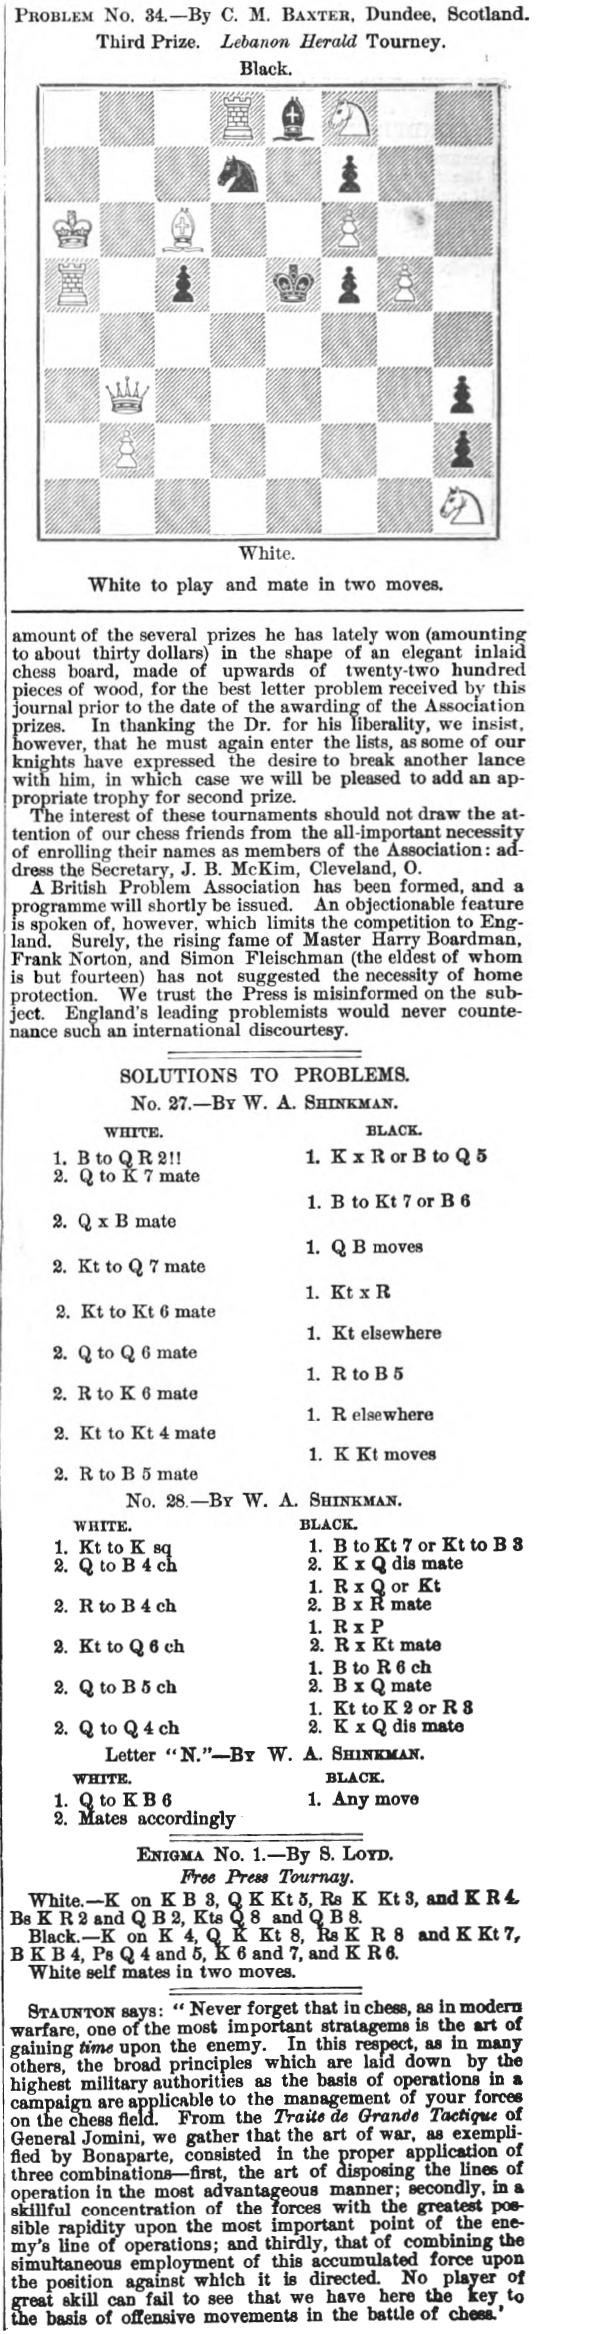 1877.12.08-03 Scientific American Supplement.jpg